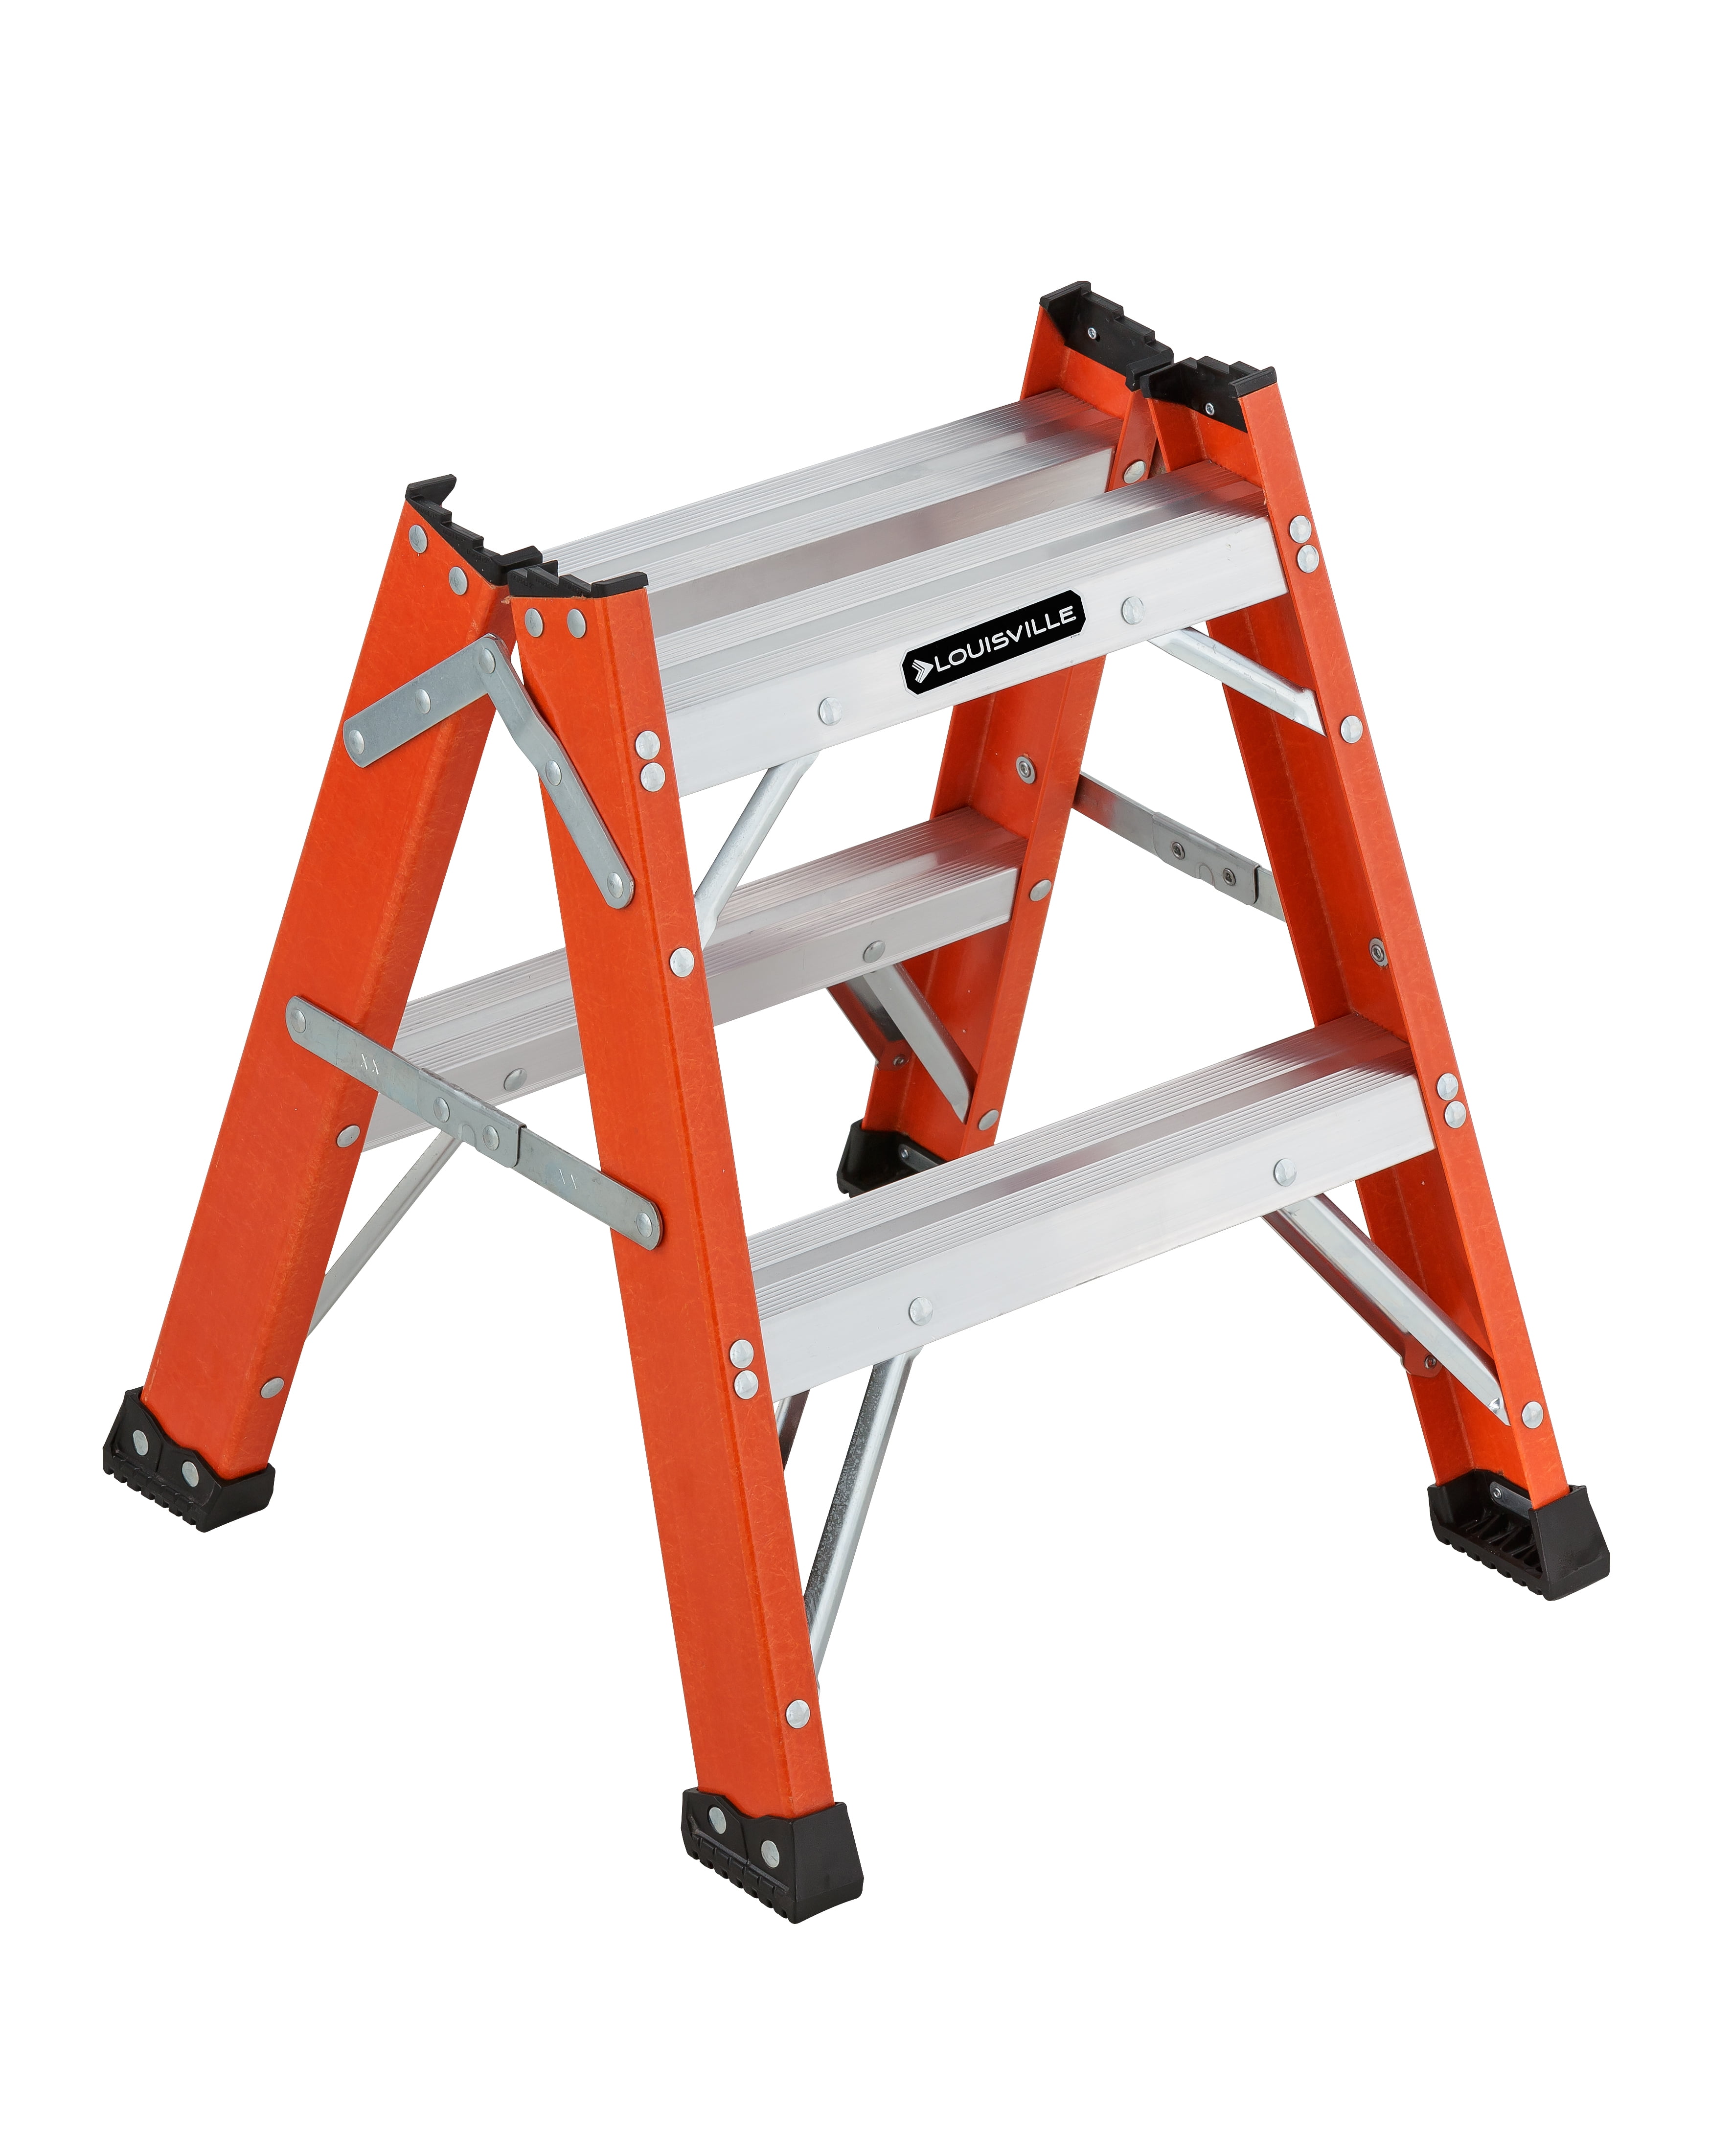 Louisville Ladder 24-Foot Fiberglass Extension Ladder - 300lb Load Capacity